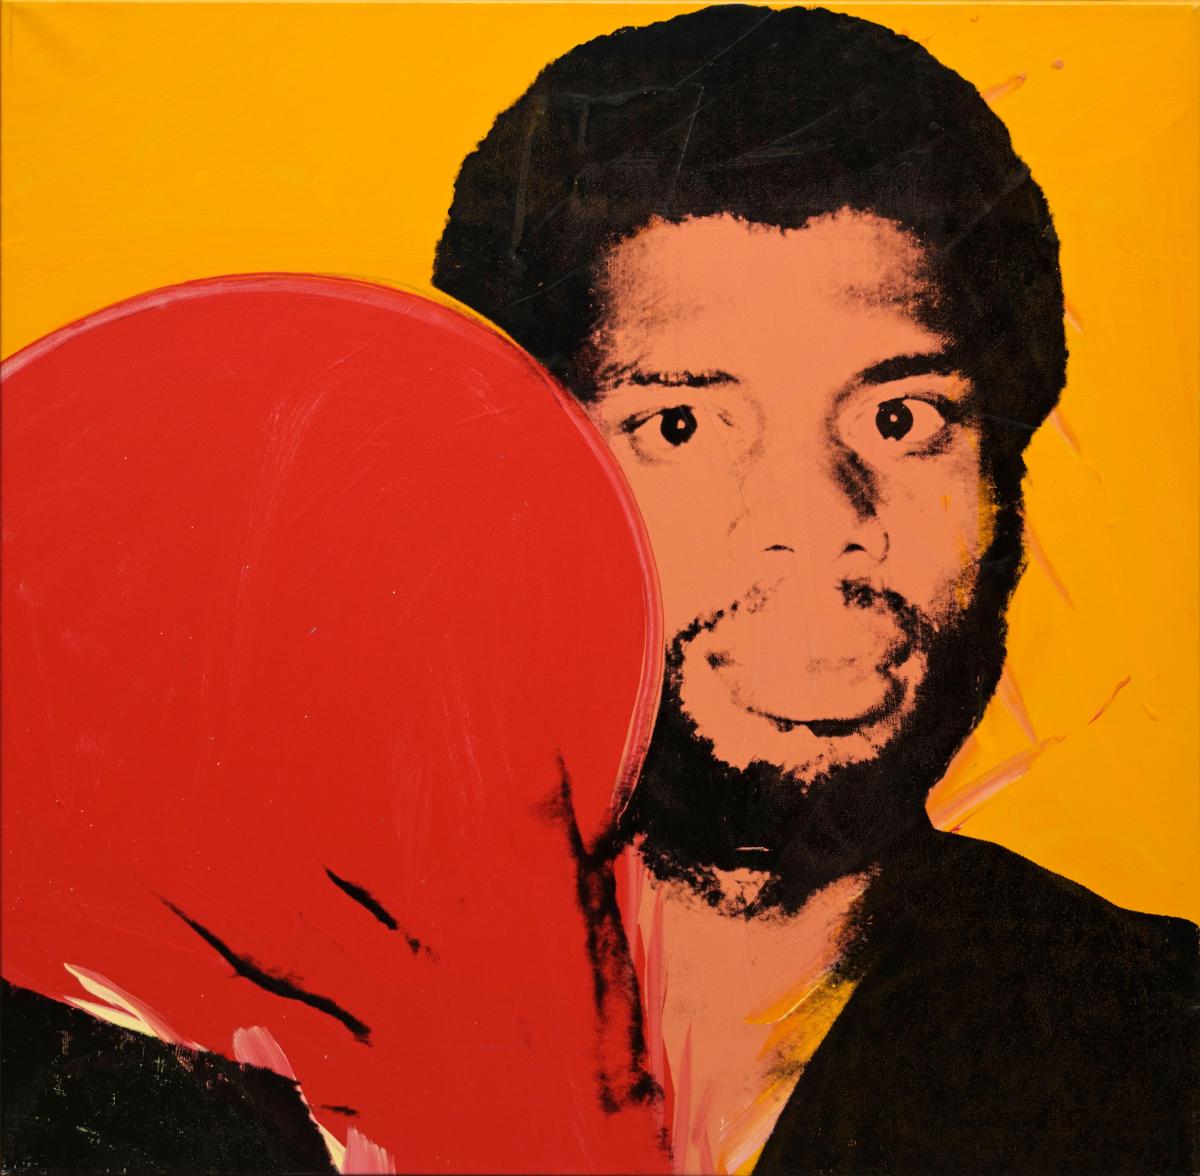 Portrait of Kareem Abdul-Jabbar by Andy Warhol